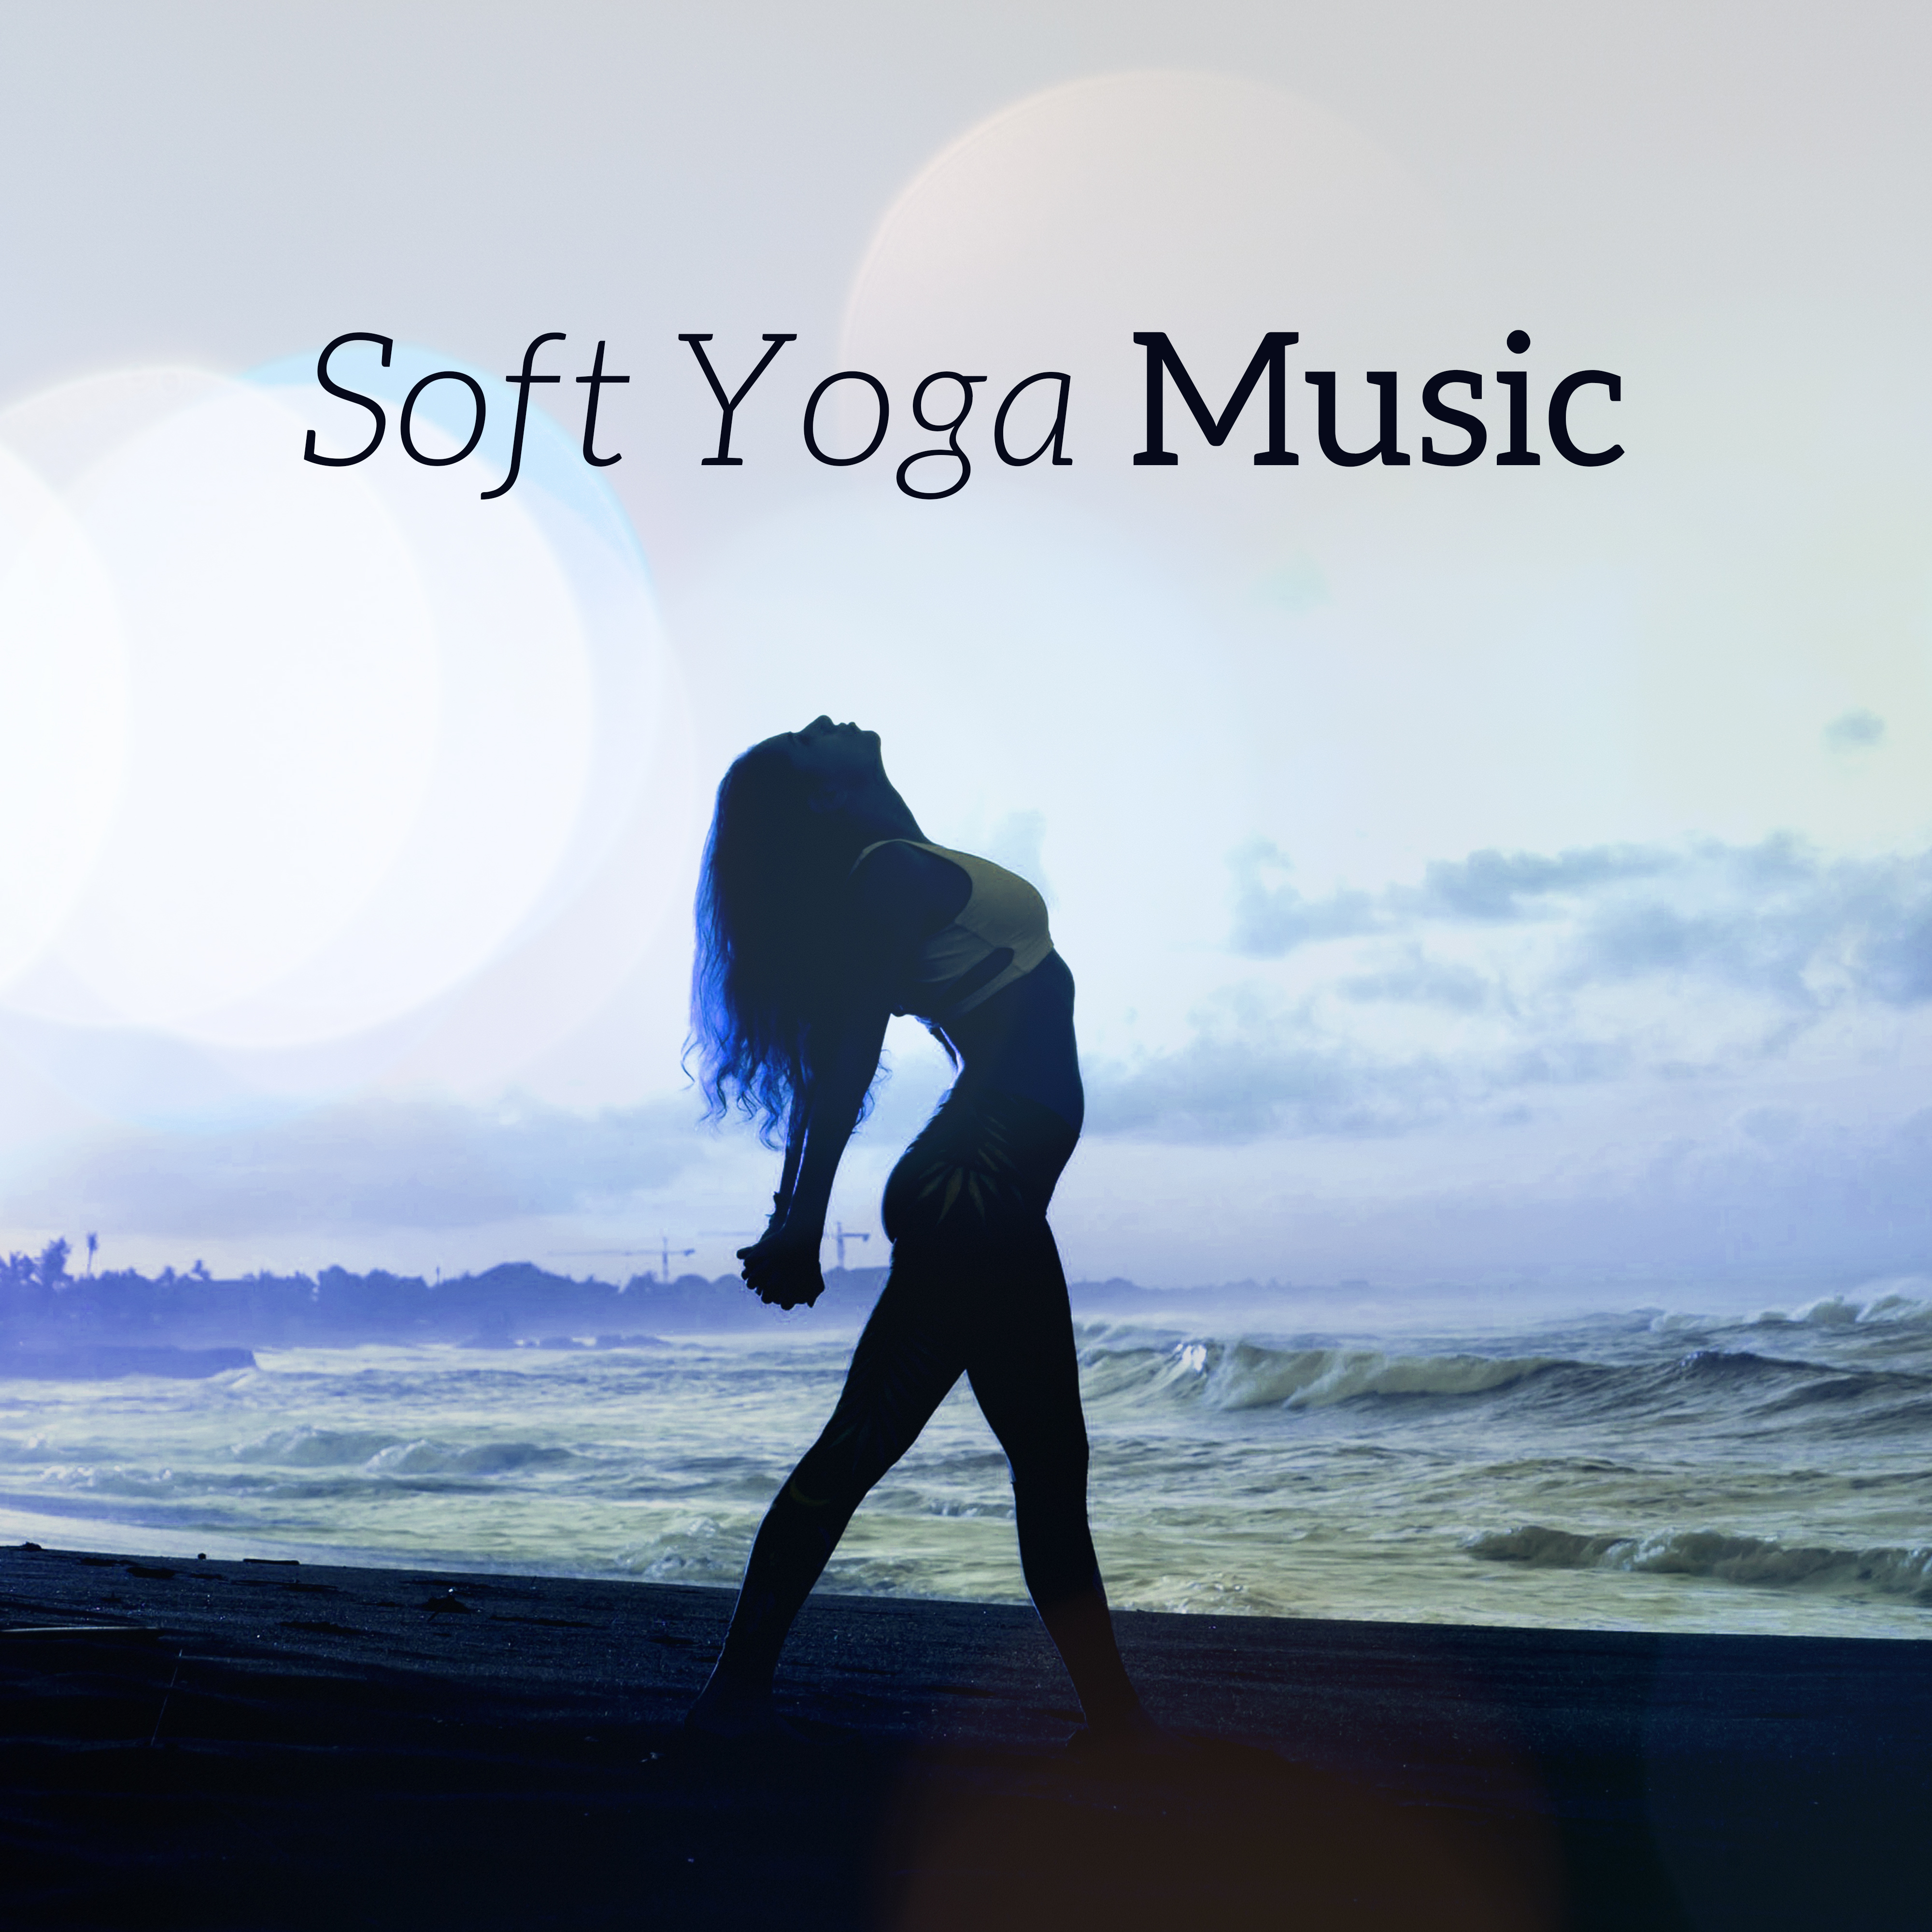 Soft Yoga Music